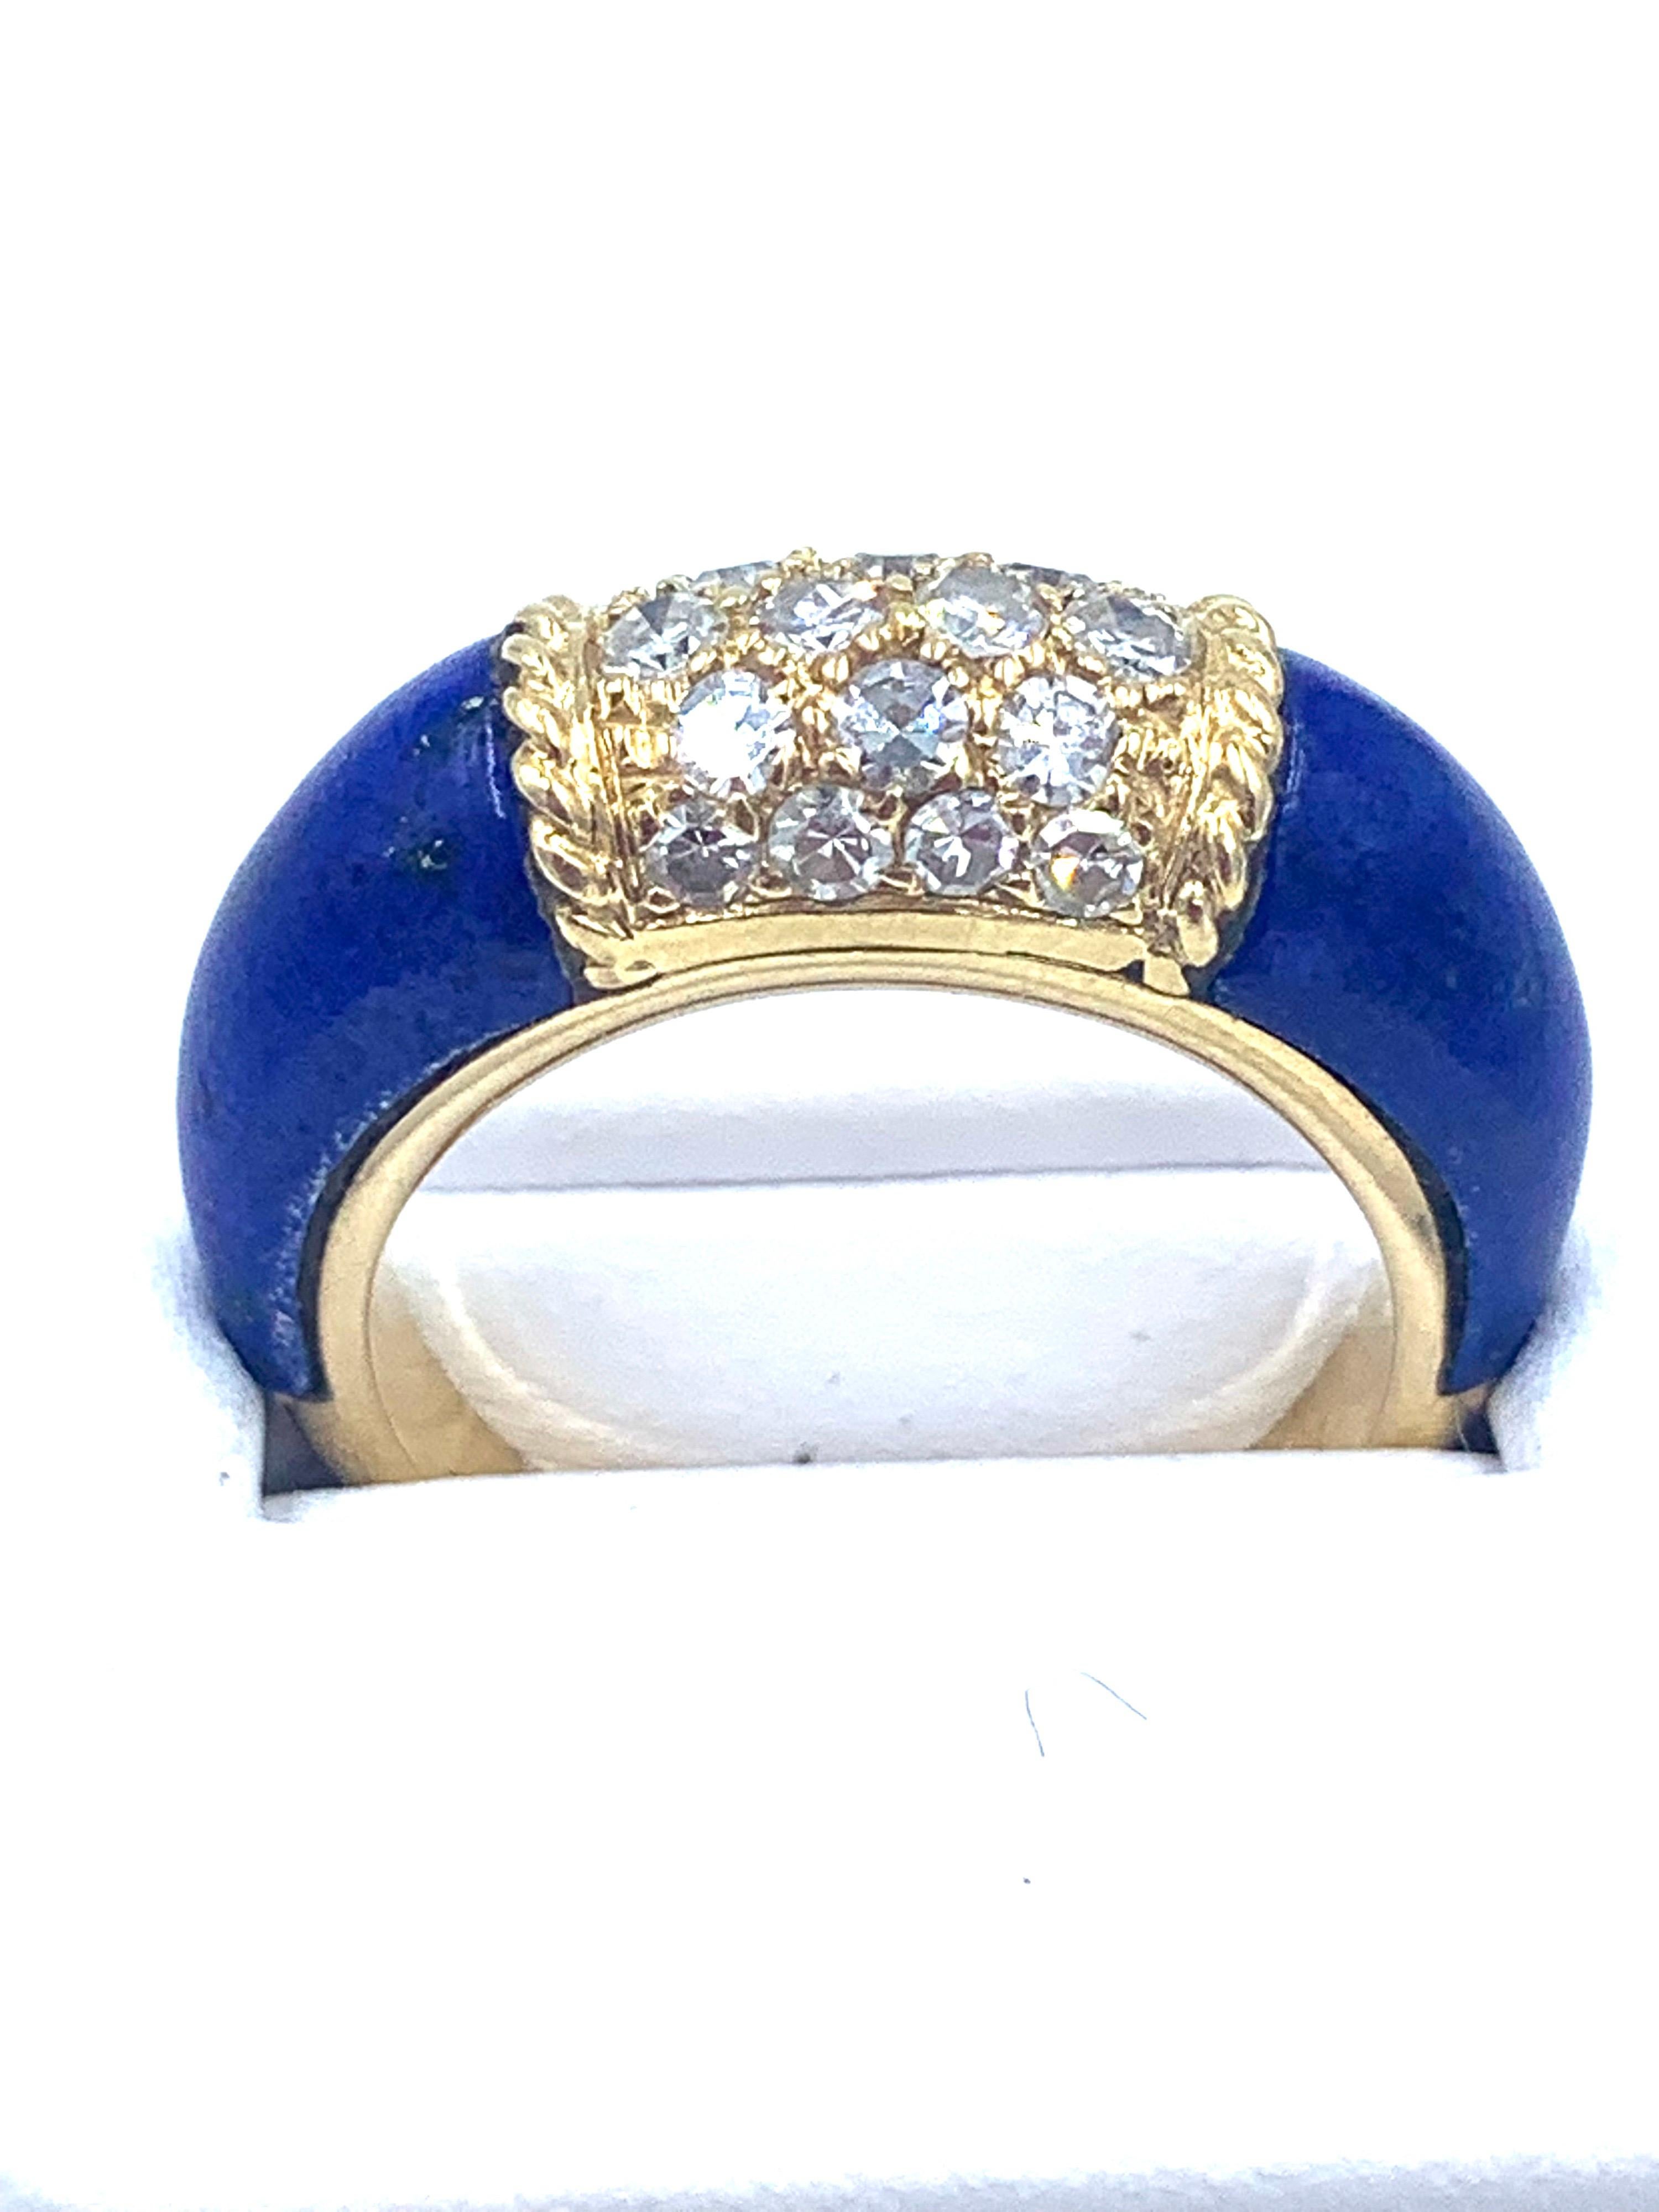 Van Cleef & Arpels Blue Lapis and Diamond Ring in 18 Karat Yellow Gold 9